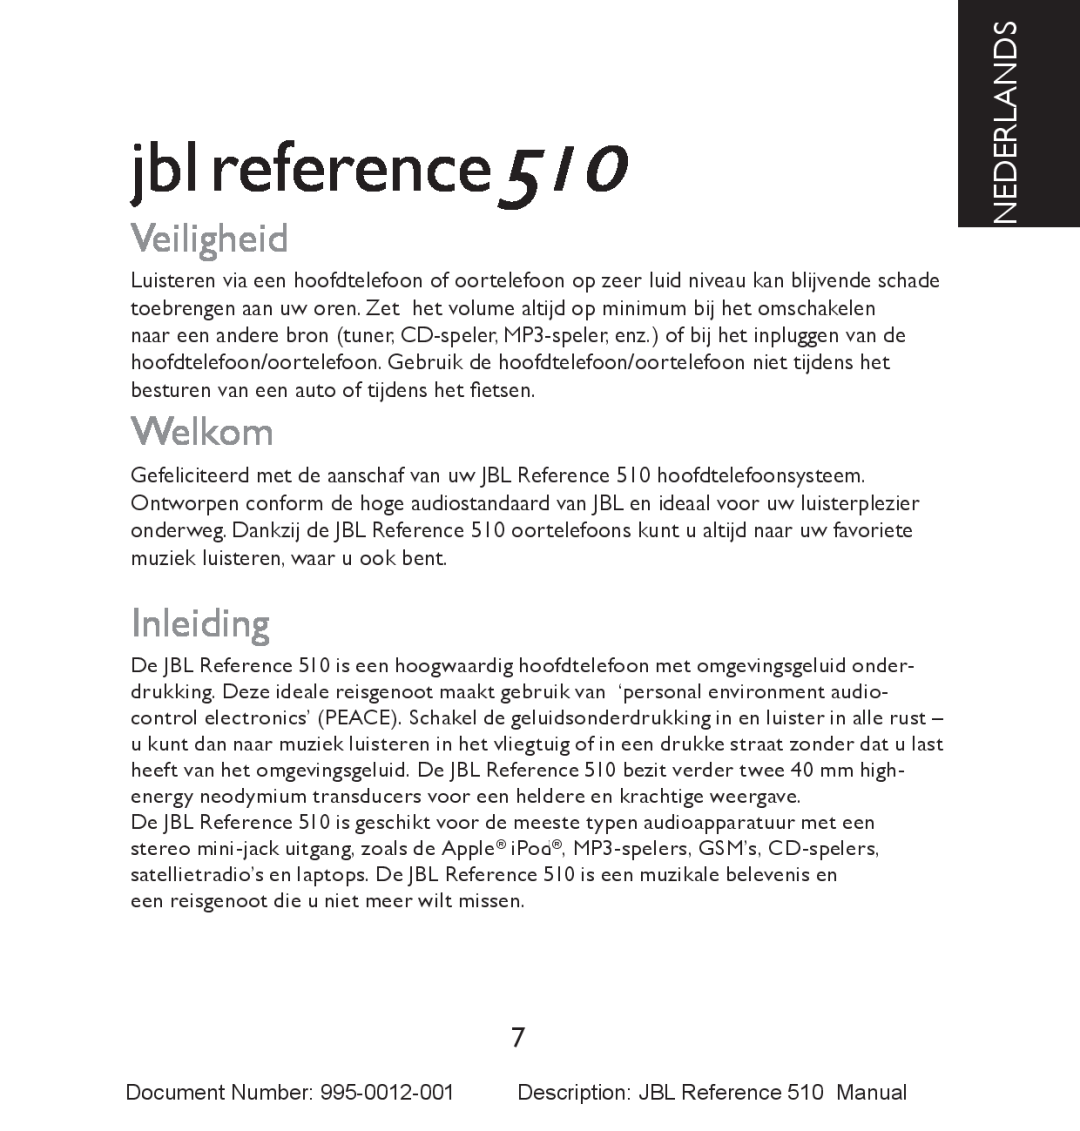 JBL manual Veiligheid, Welkom, Inleiding, Nederlands, jbl reference510 